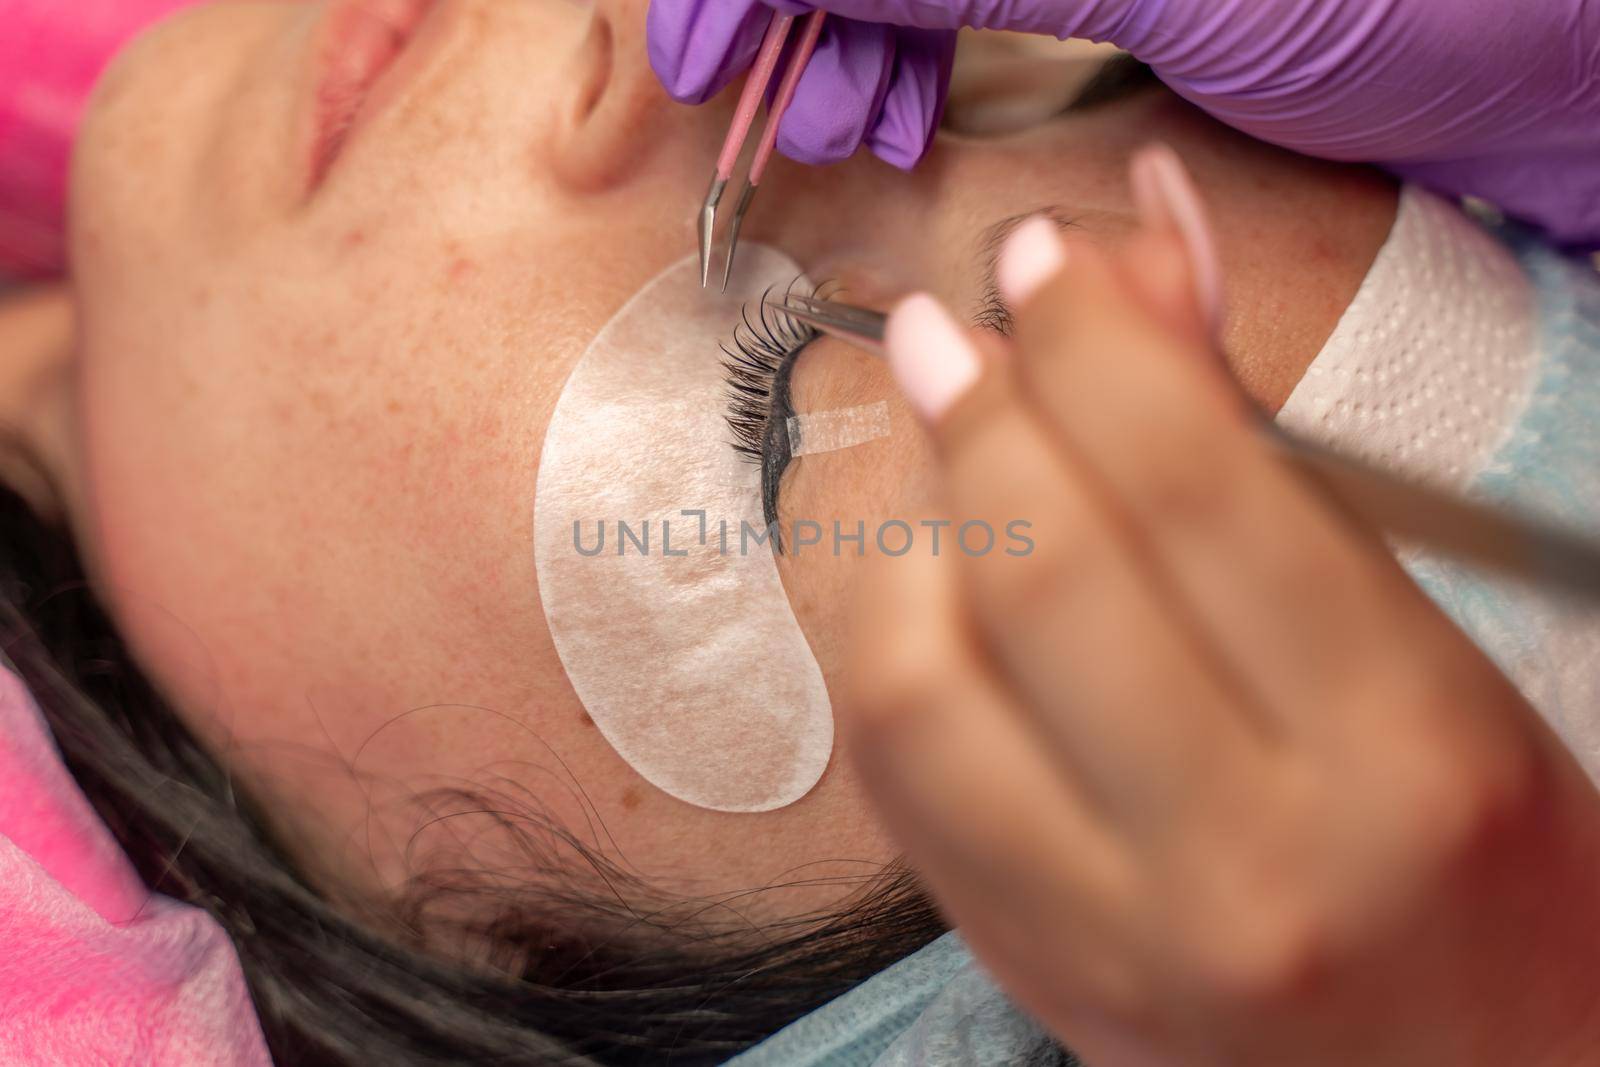 Eyelash extension procedure. Woman eye with long eyelashes. lashes, close up, macro, selective focus